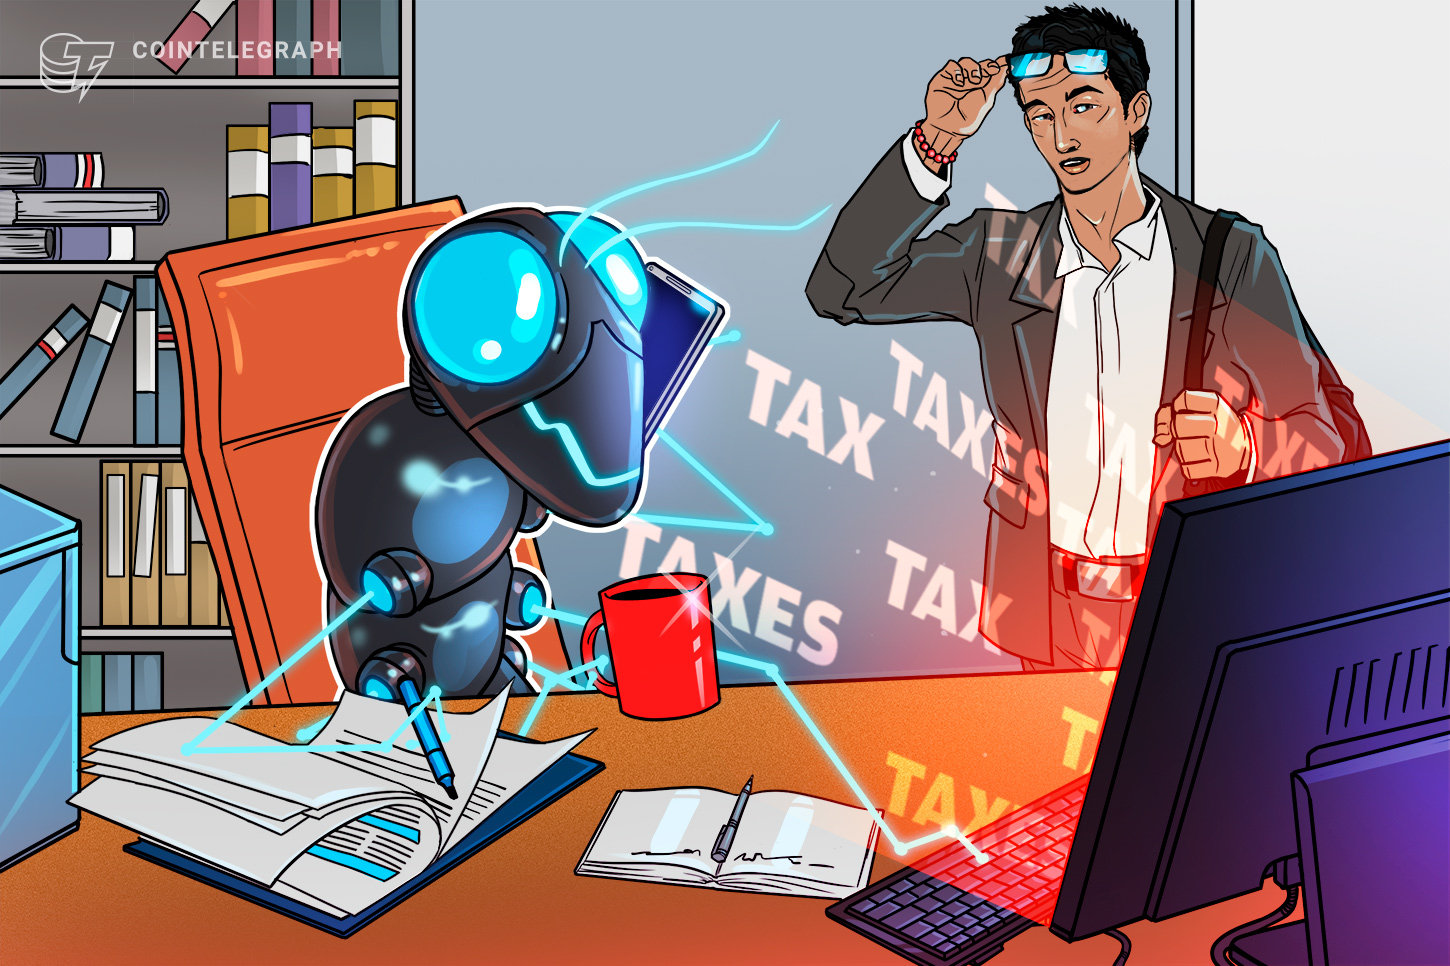 Lukka Co-CEO Explains How Blockchain Information Saves on Taxes